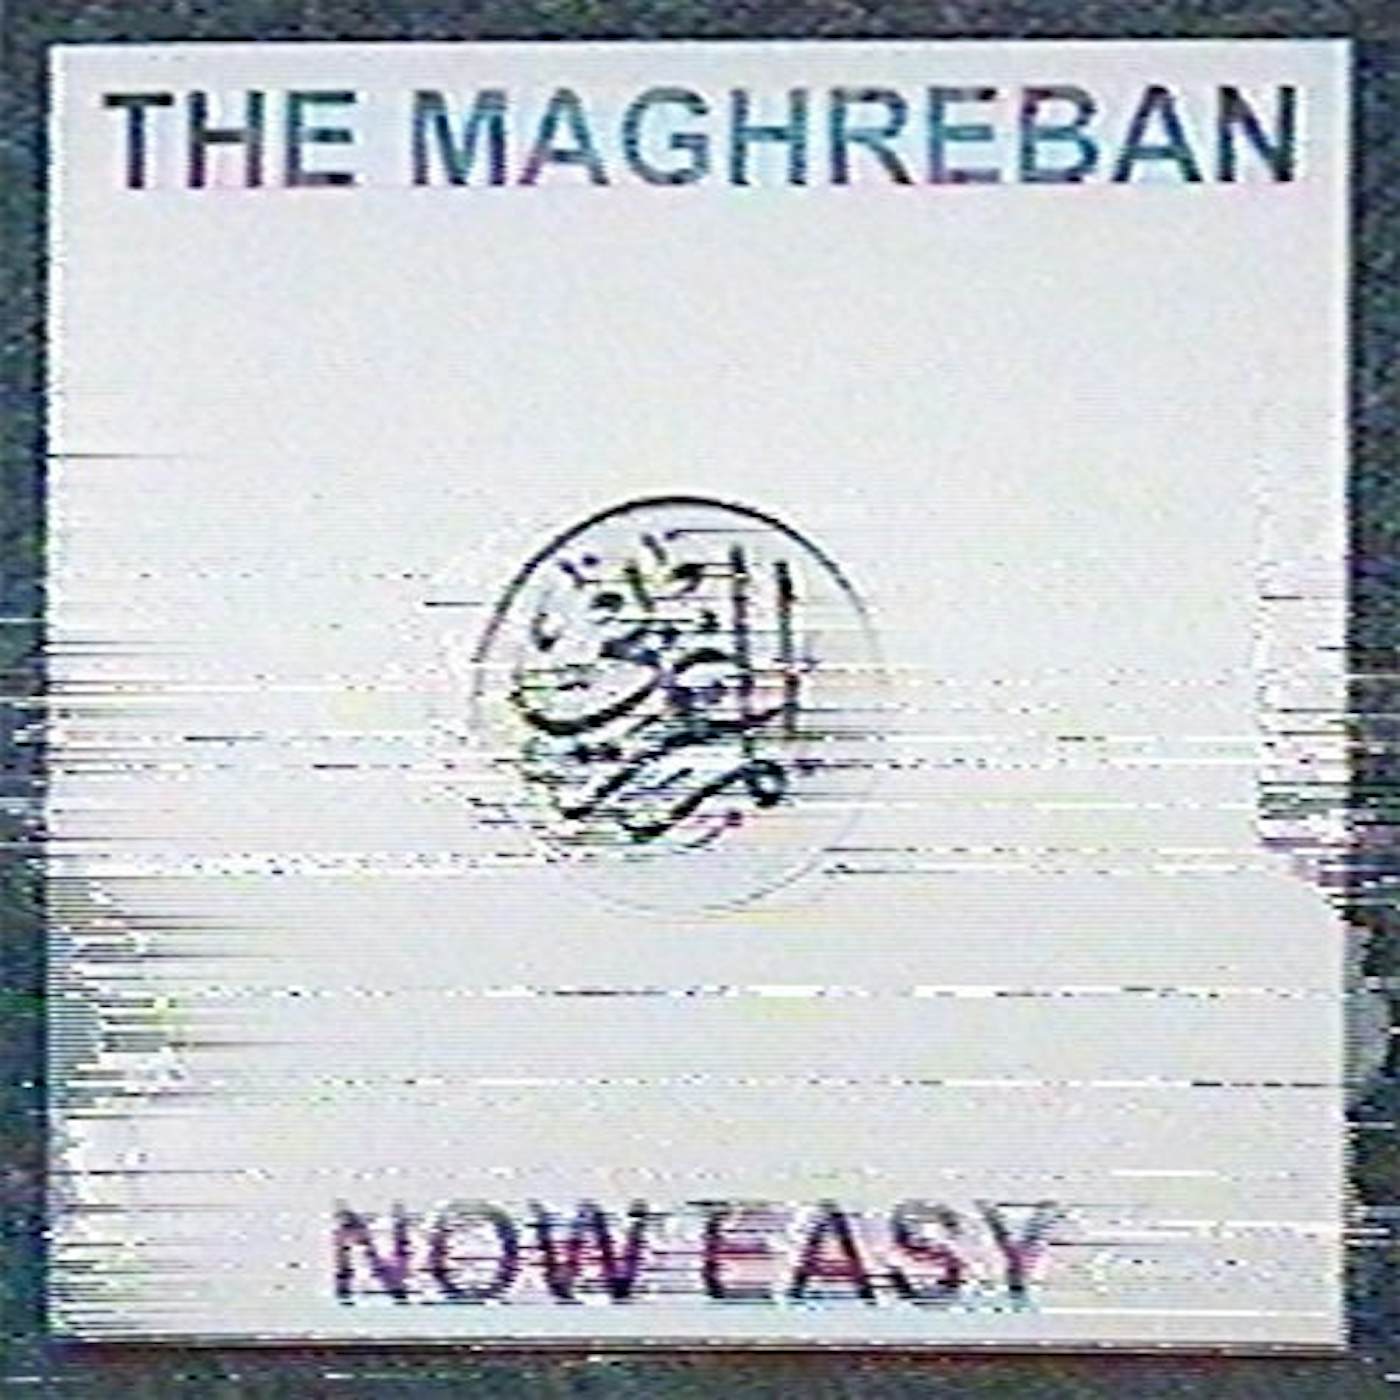 The Maghreban Now Easy Vinyl Record